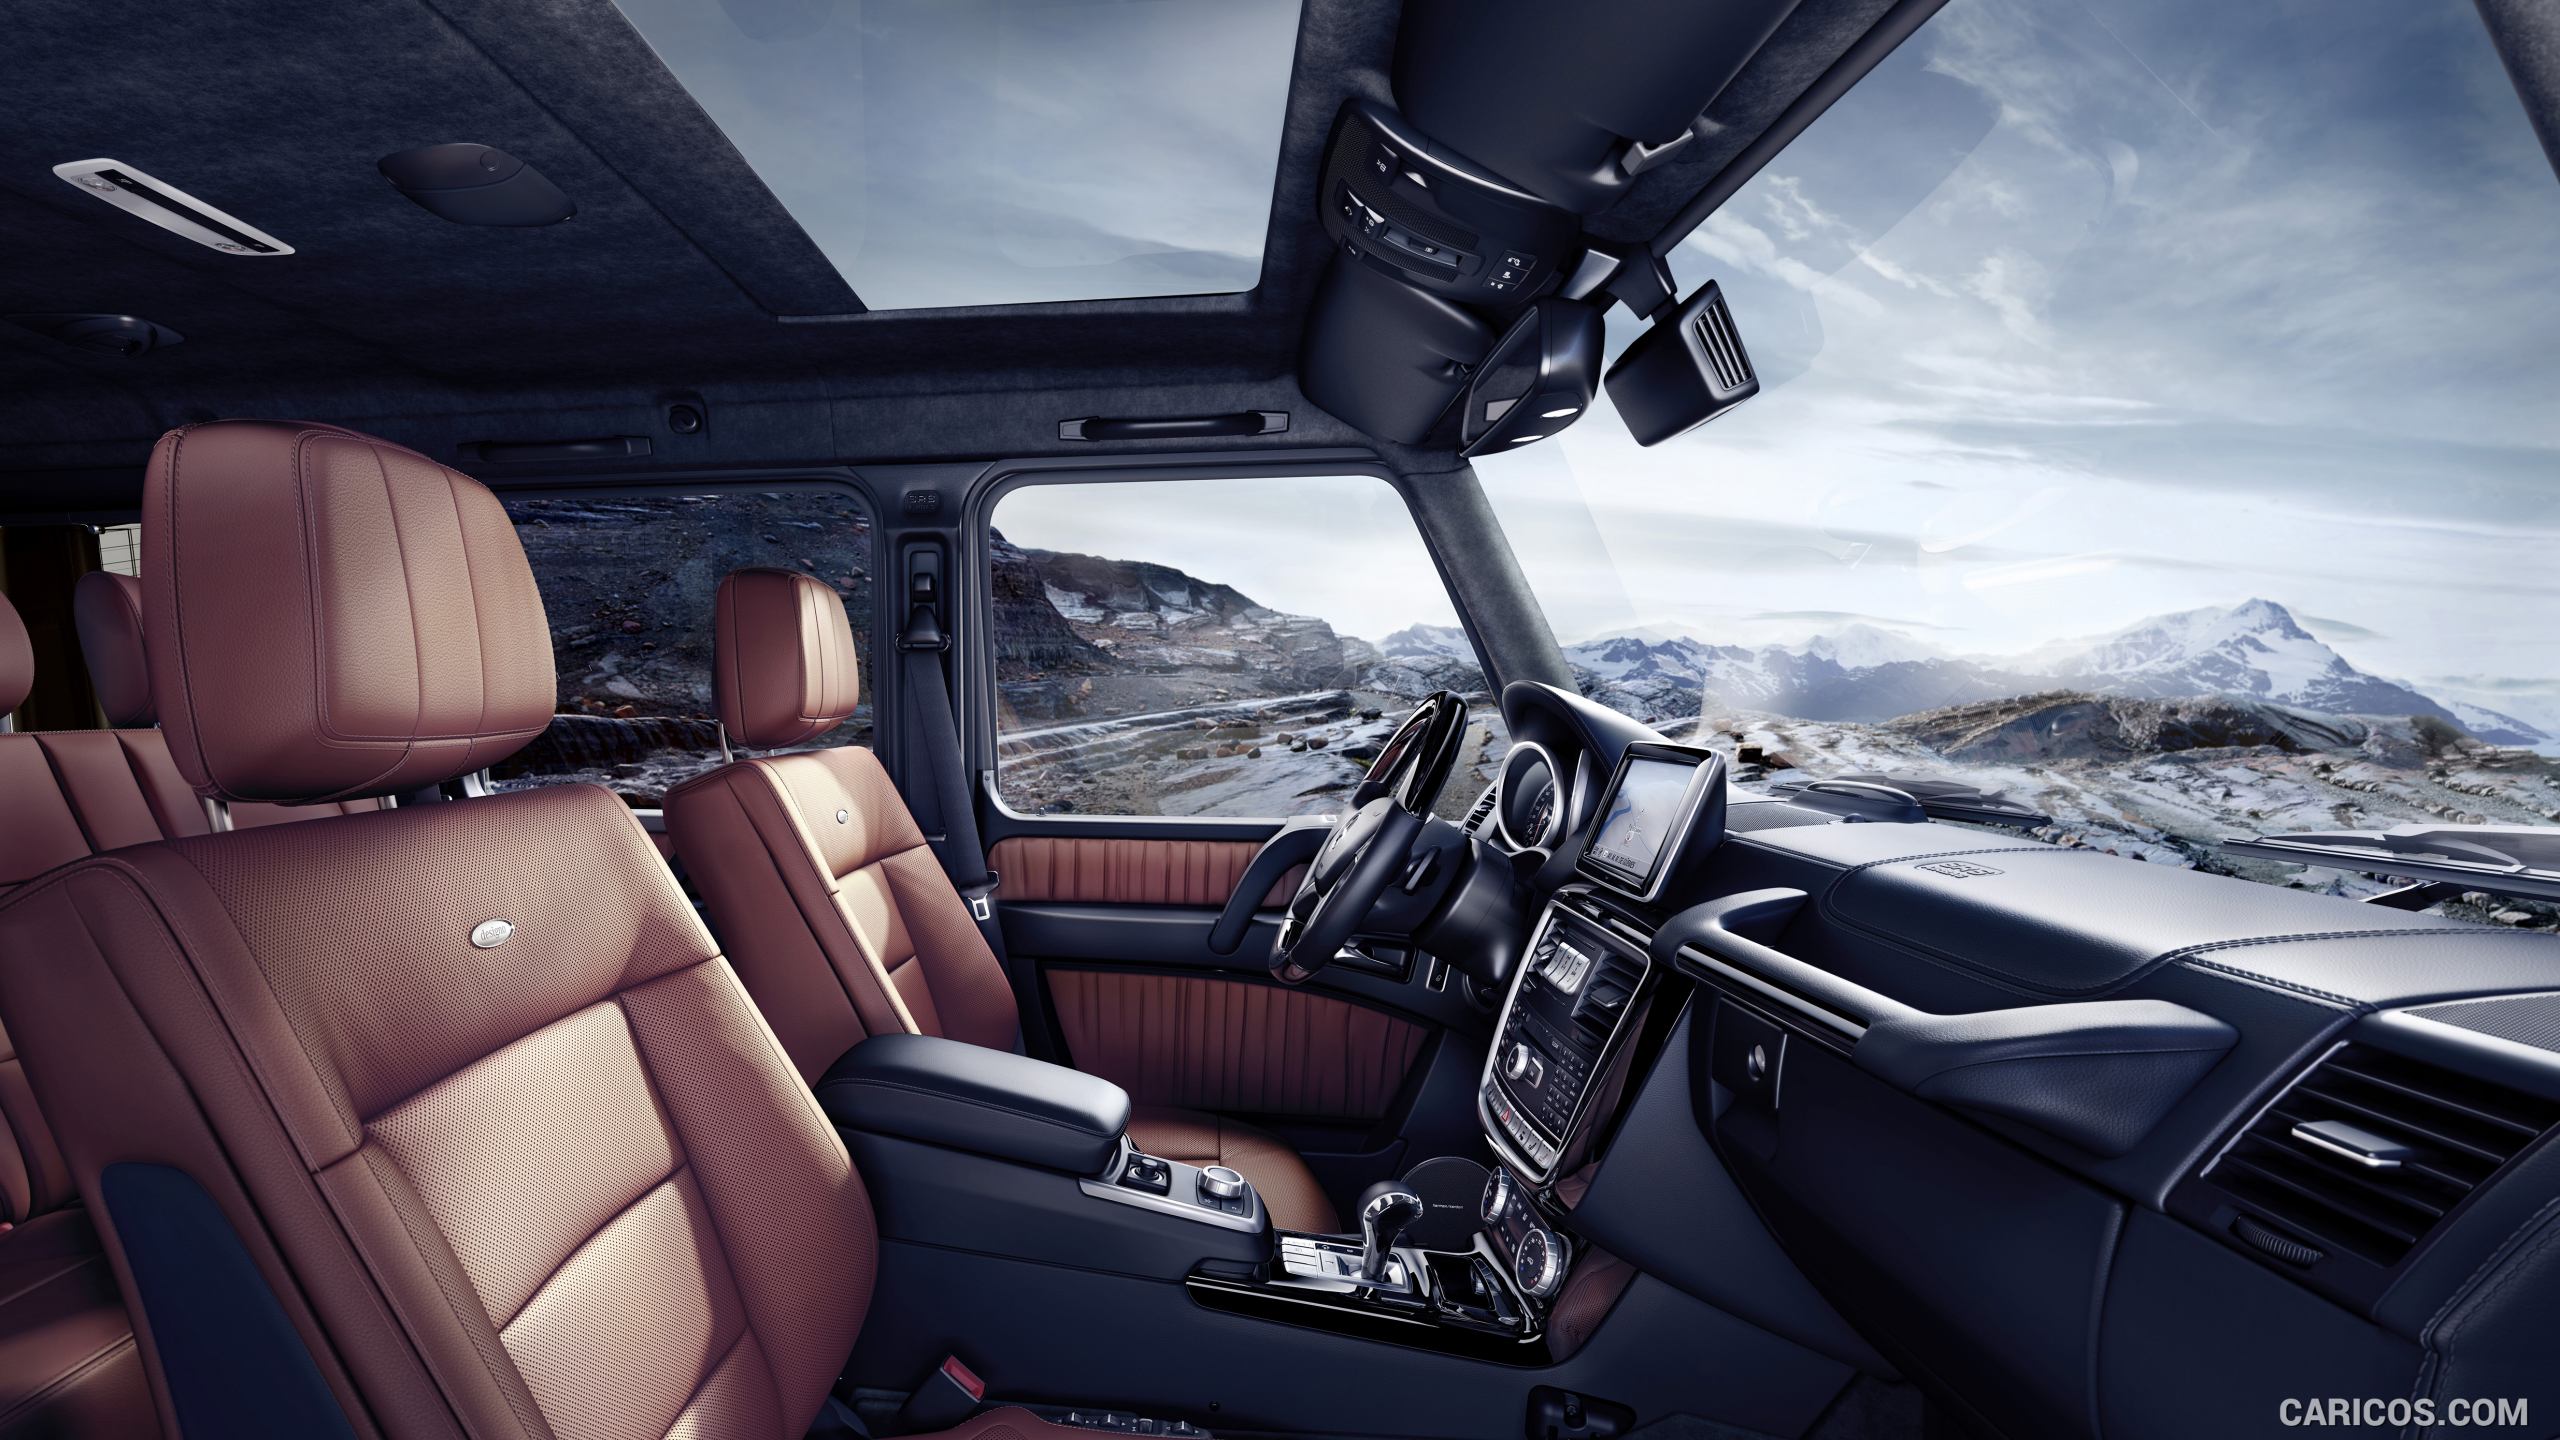 2016 Mercedes-Benz G-Class (Designo Nappa Leather Light Brown) - Interior, #7 of 131